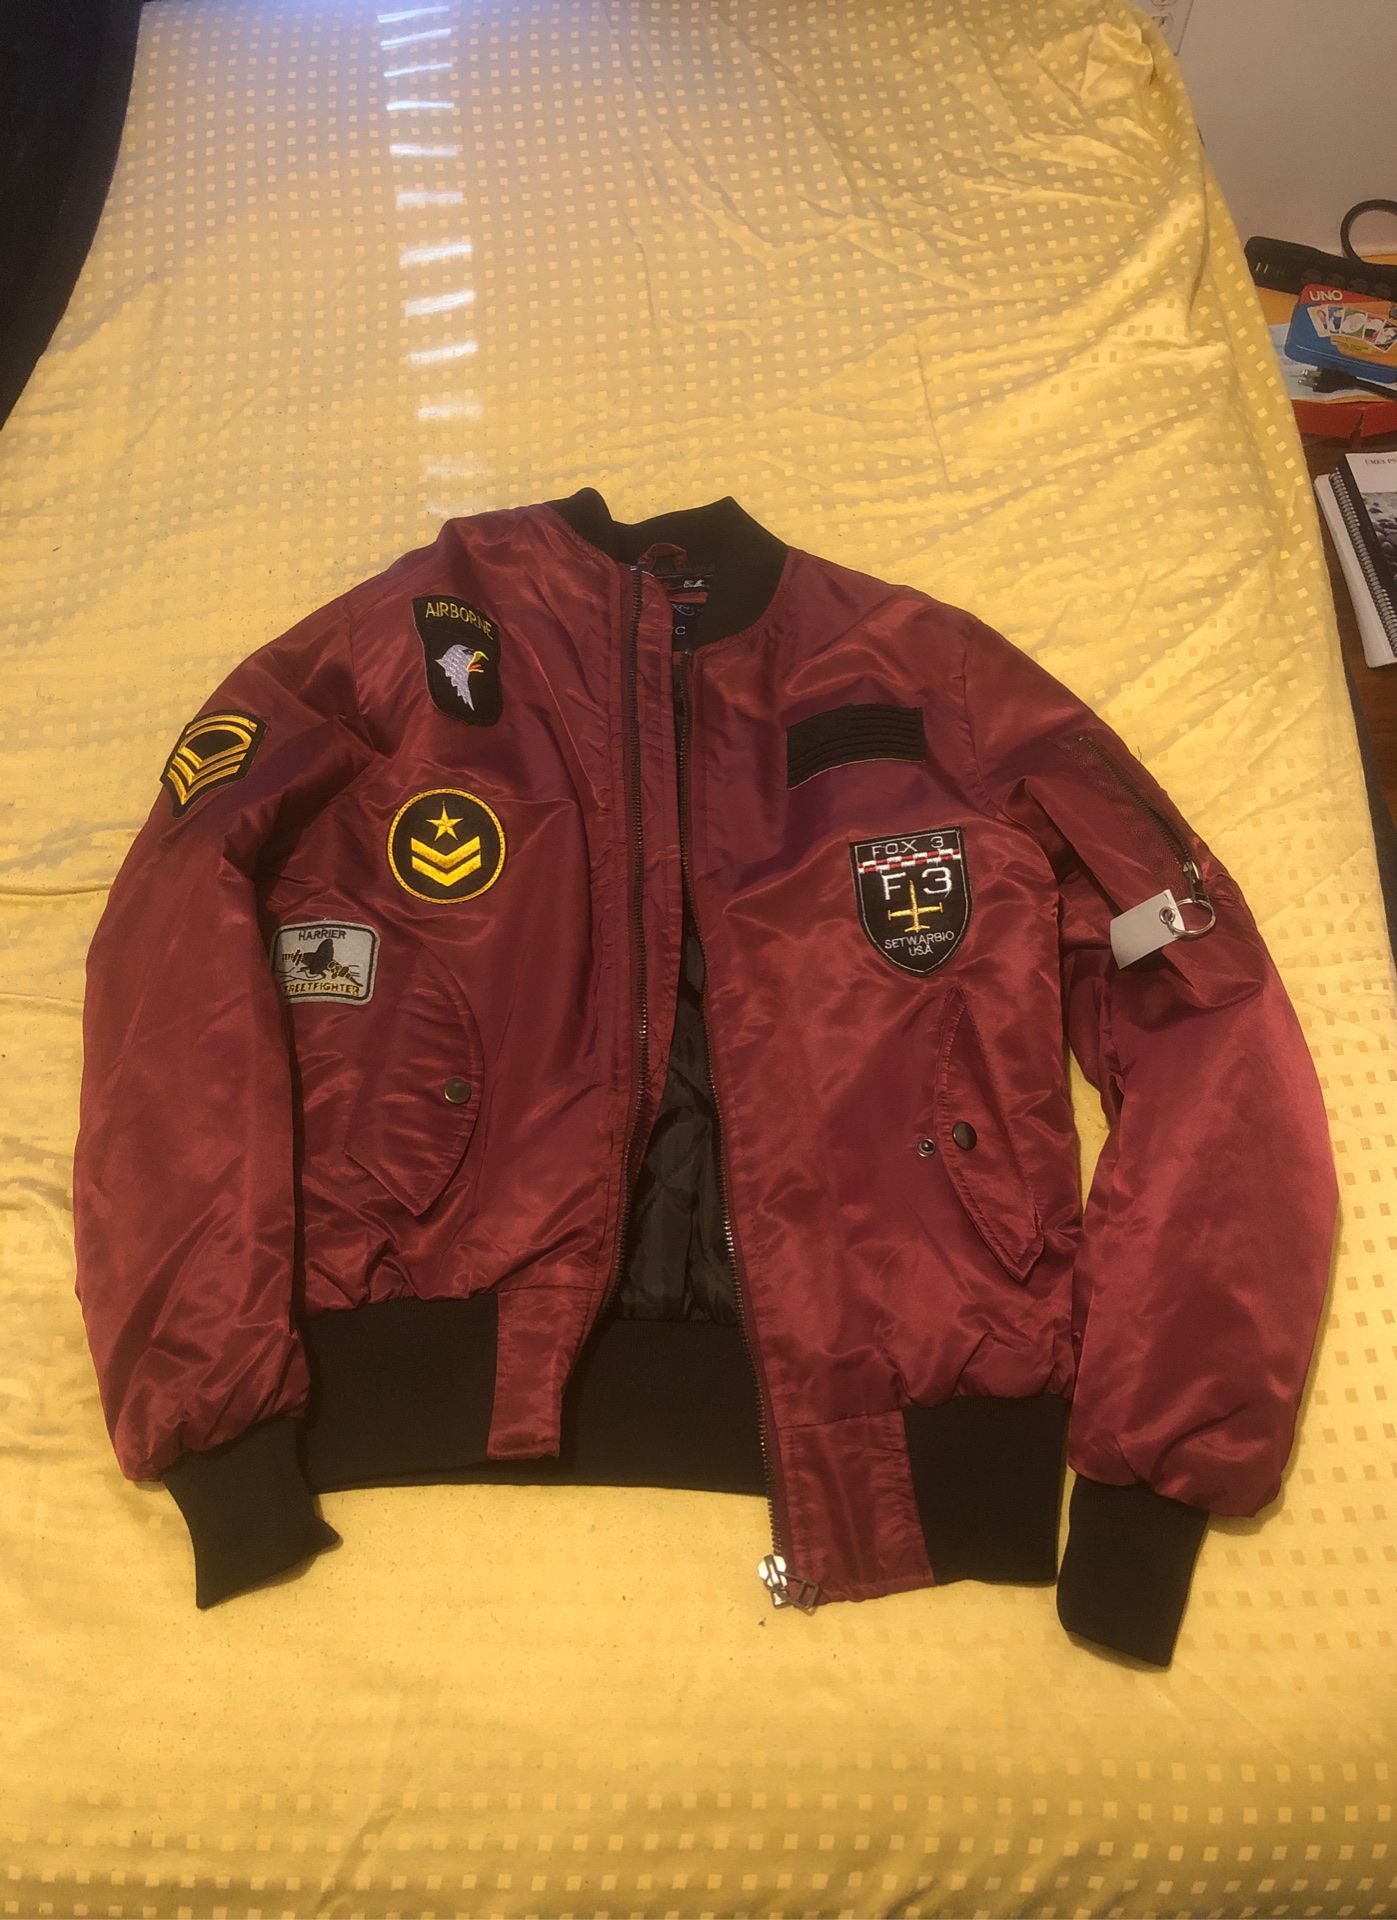 Bomber jacket size small